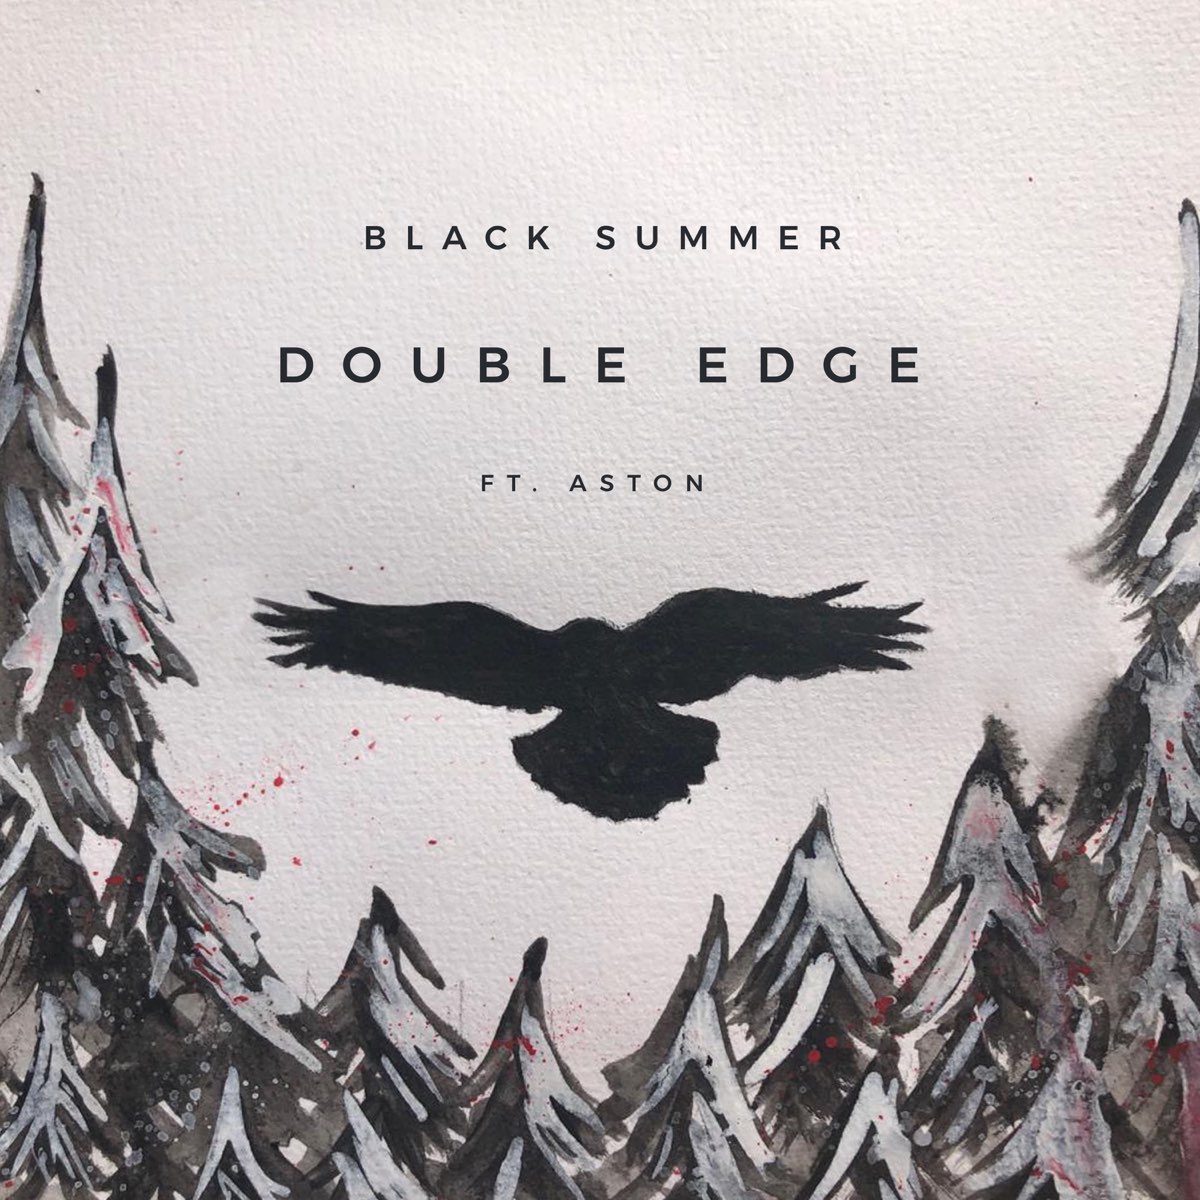 Double Edge (feat. Aston) - Single by Black Summer on Apple Music